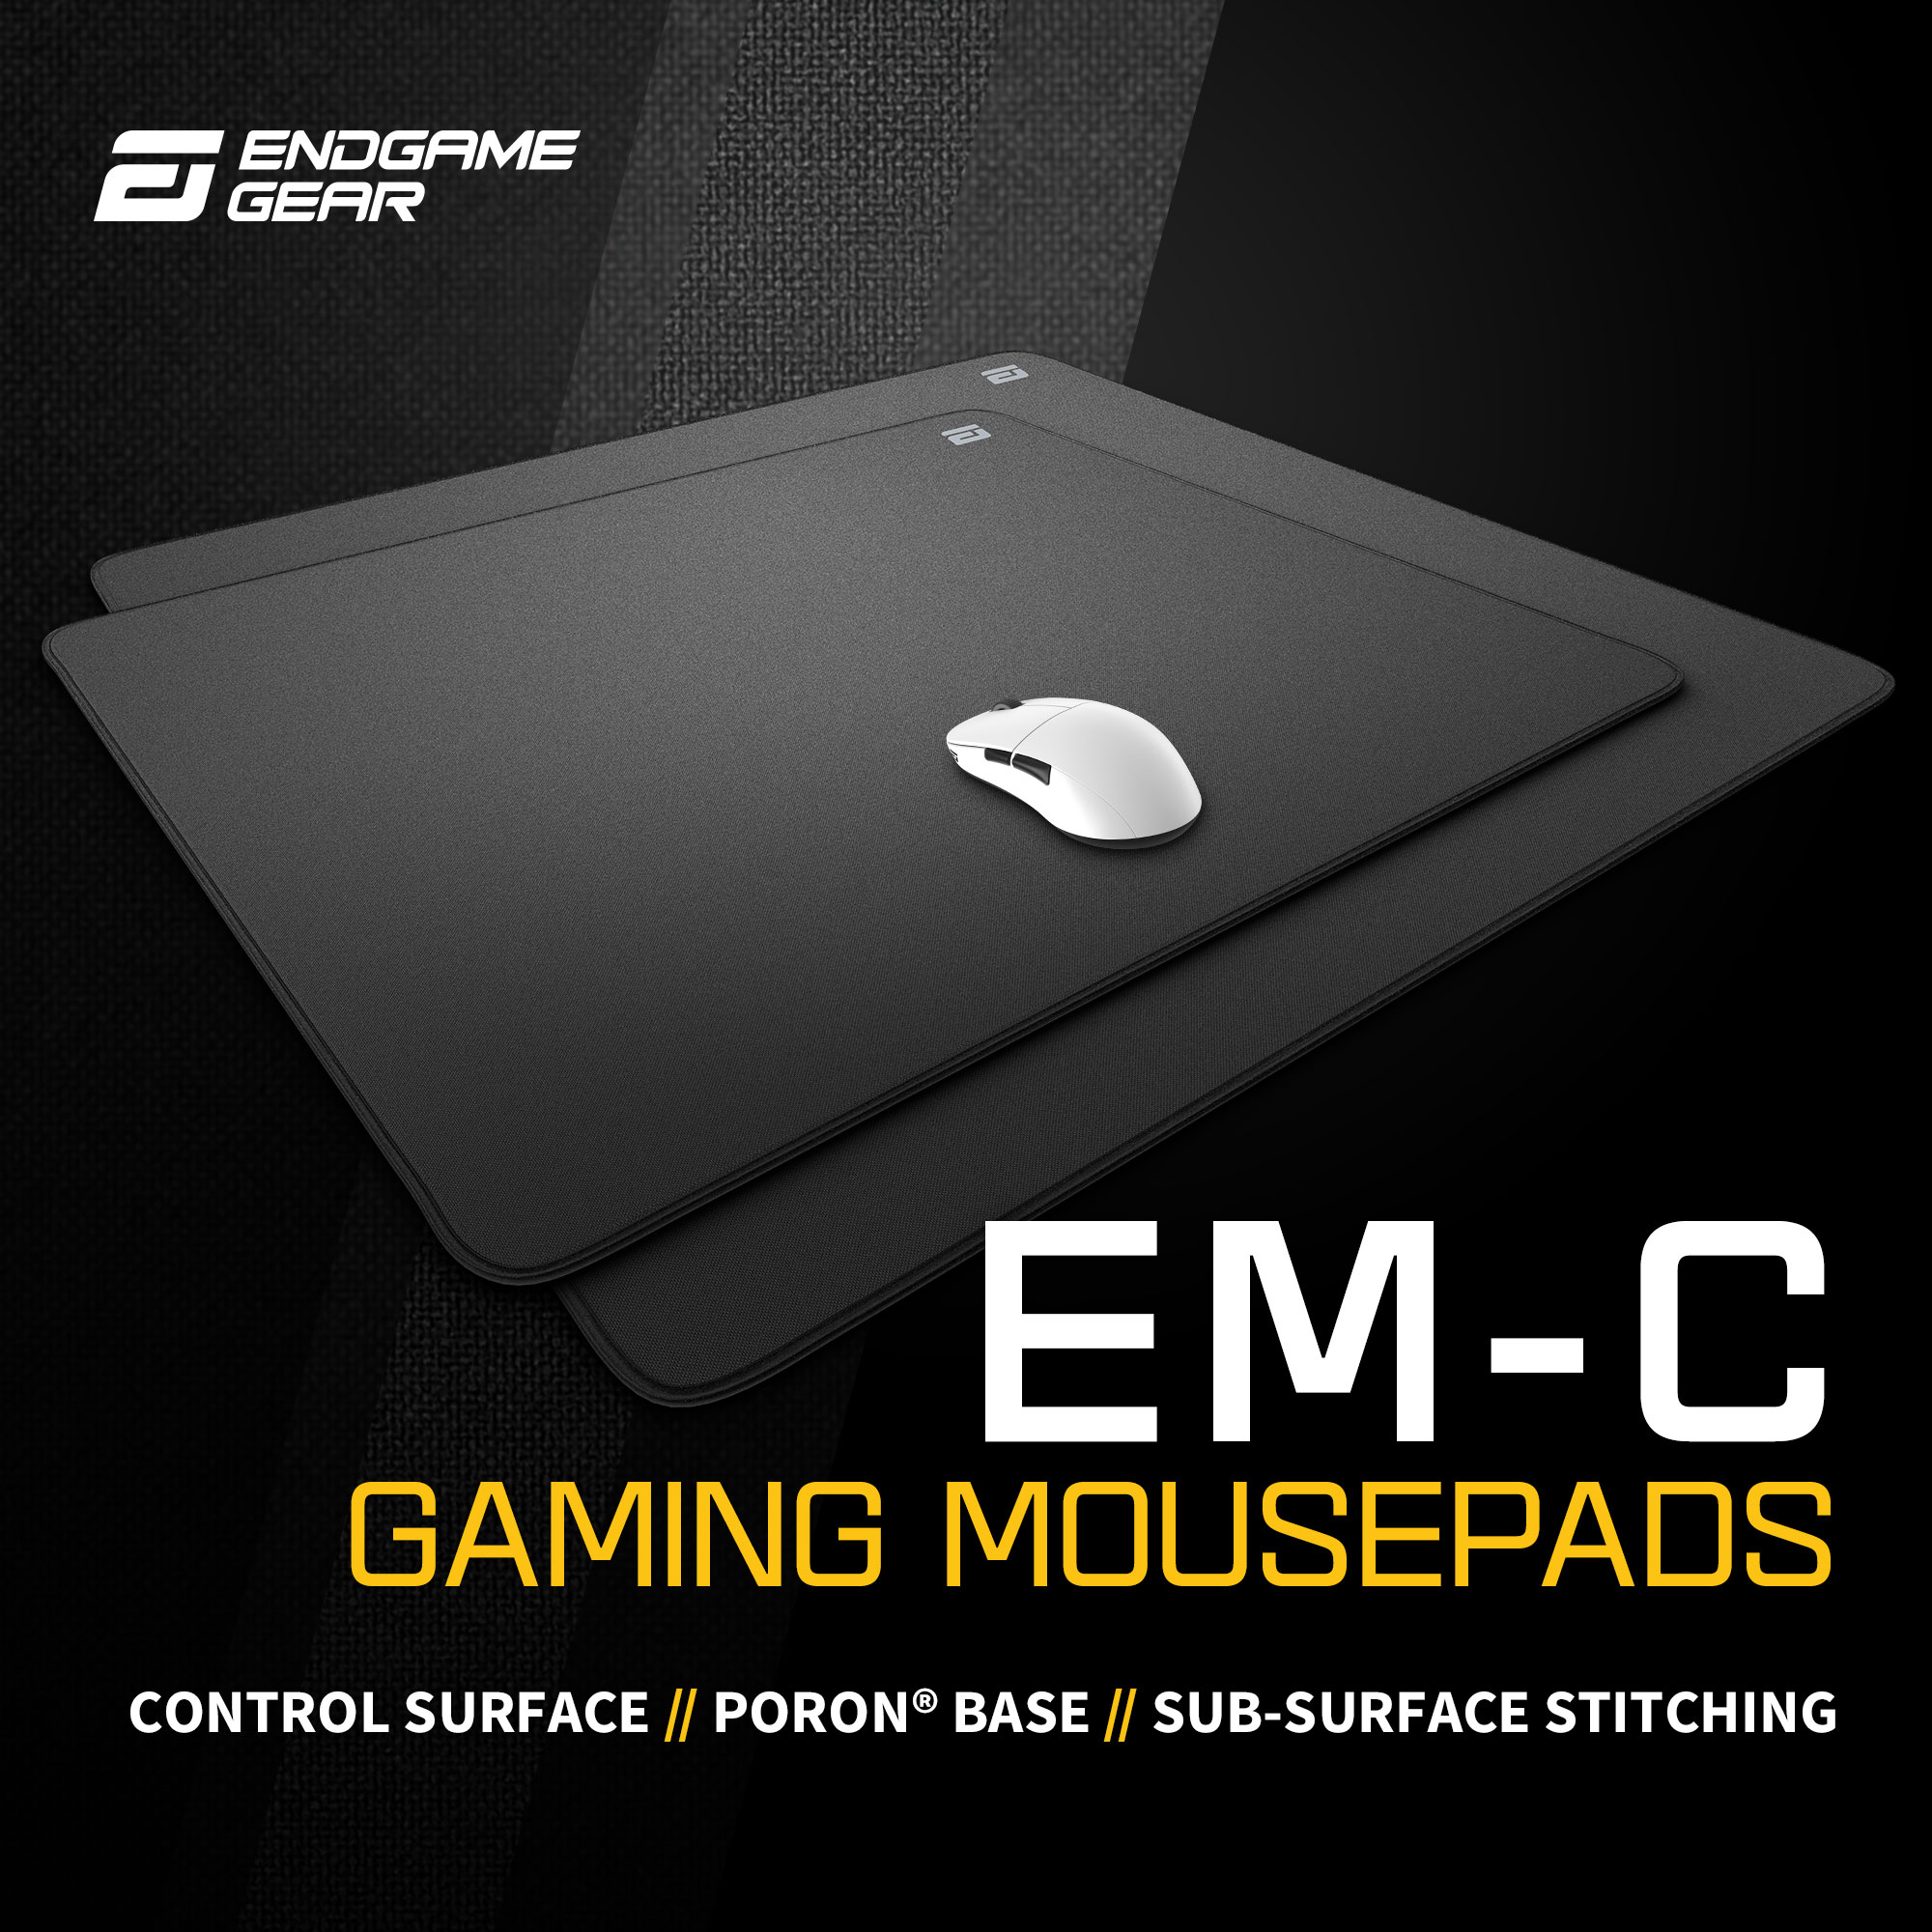 EM-C ゲーミングマウスパッド - Endgame Gear - 株式会社アーキサイト